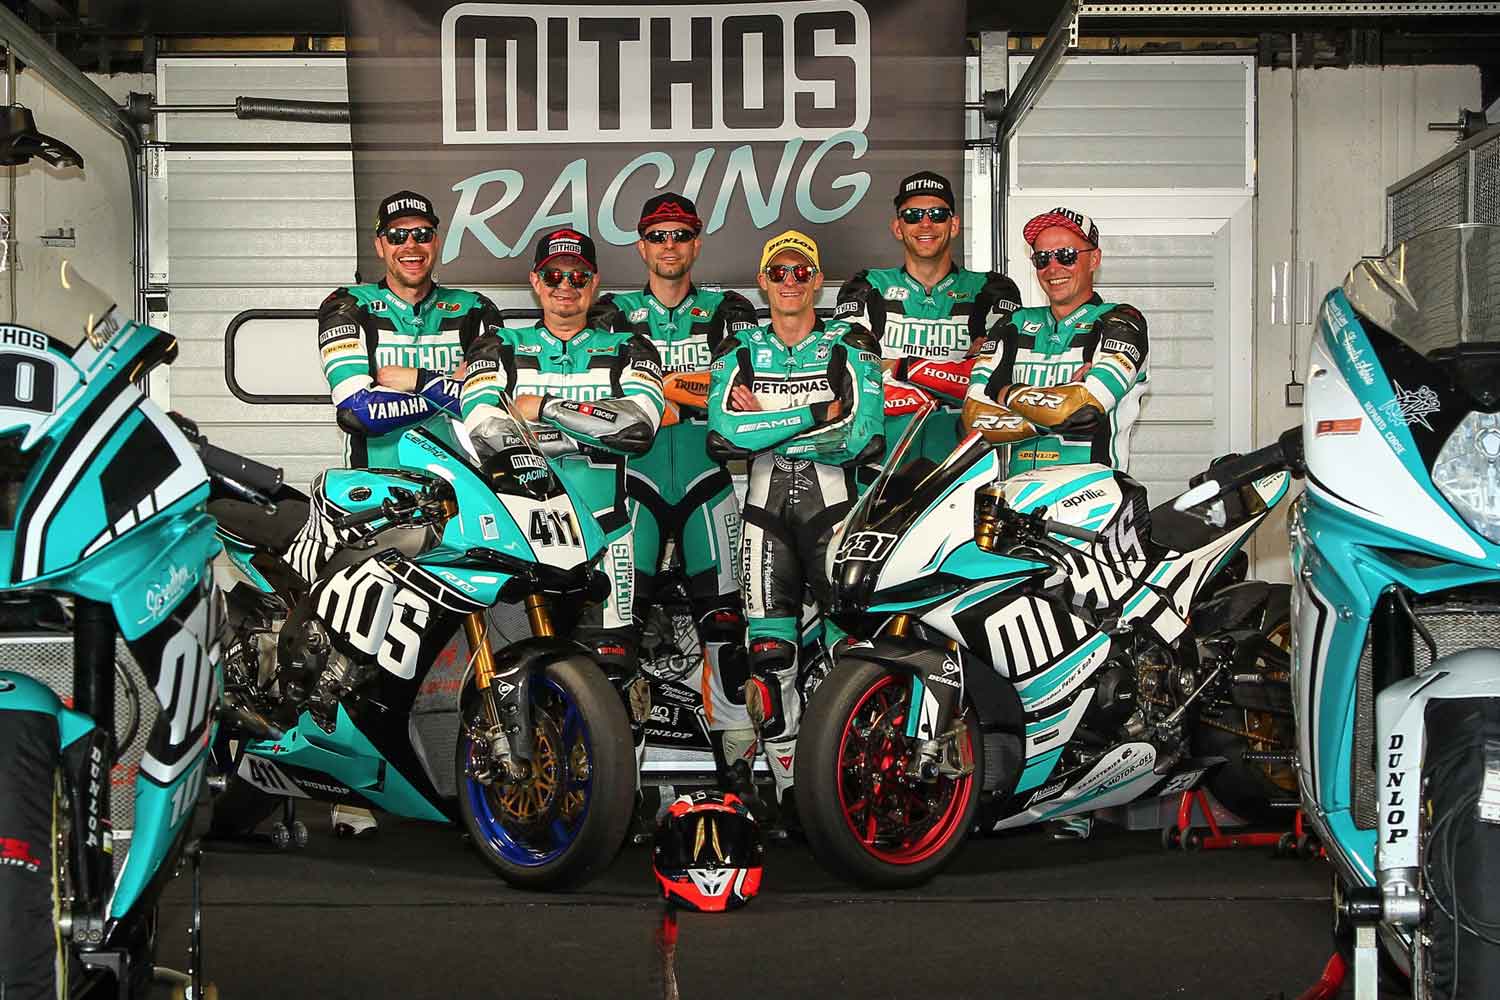 Mithos Racing Team